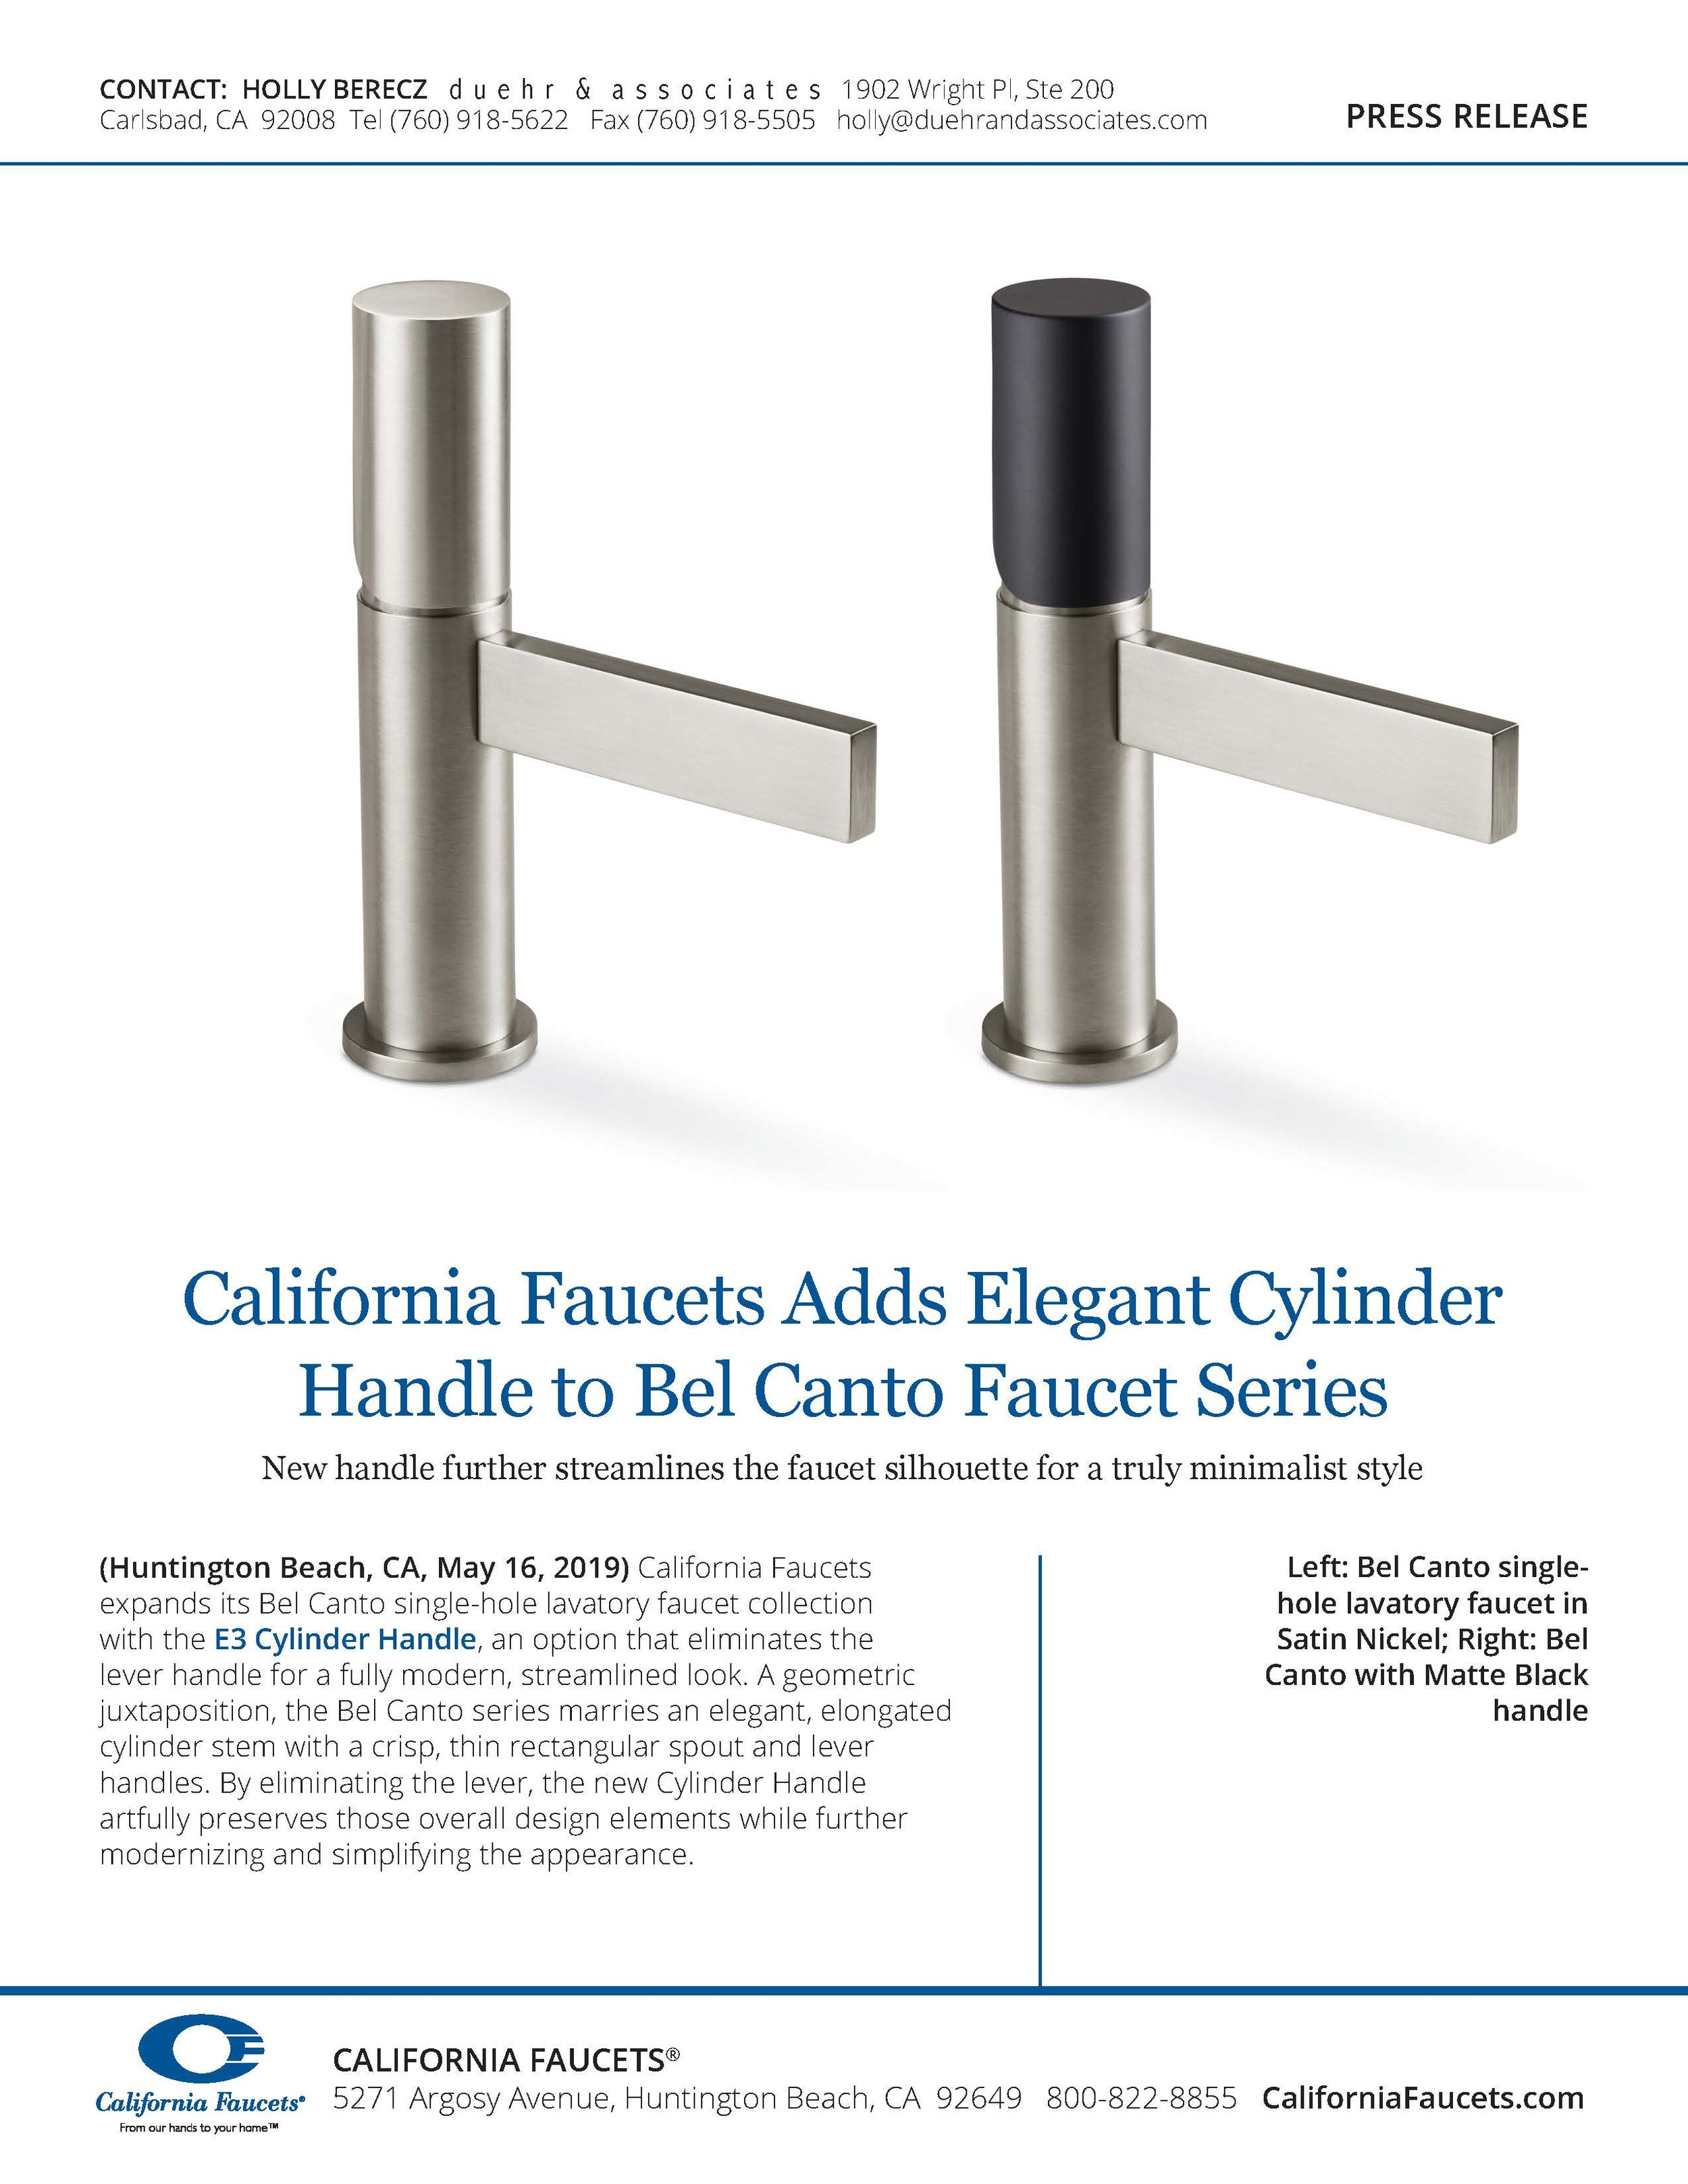 California Faucets Press Release